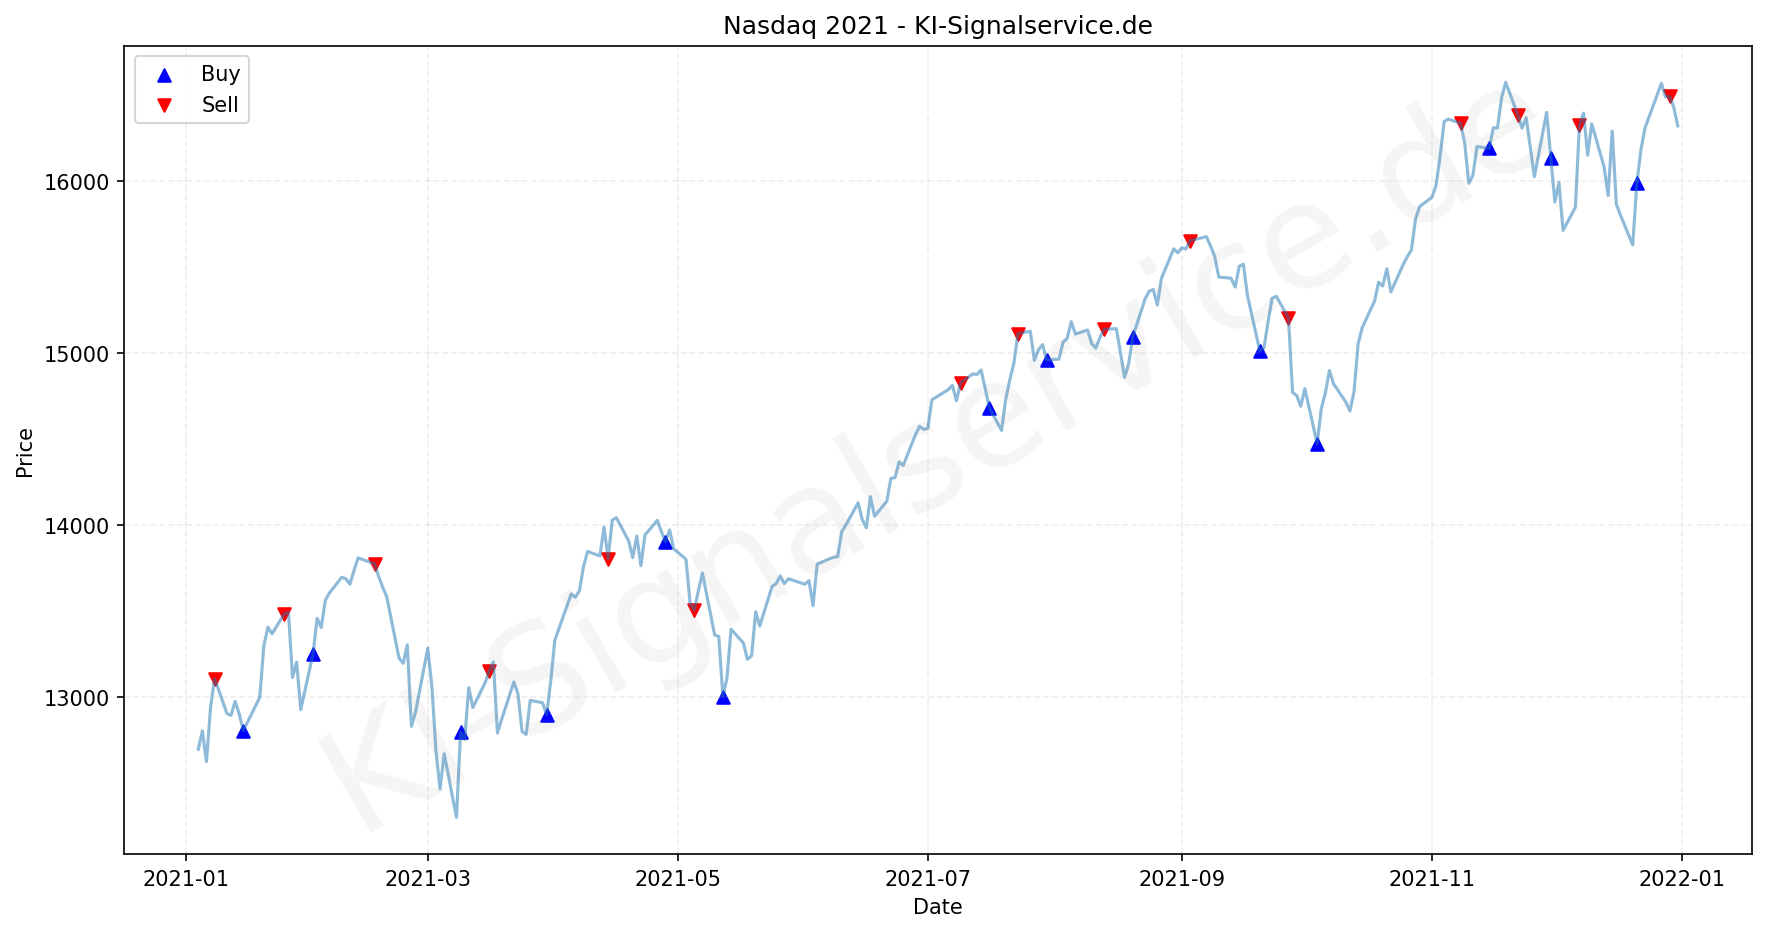 NASDAQ Index Performance Chart - KI Tradingsignale 2021